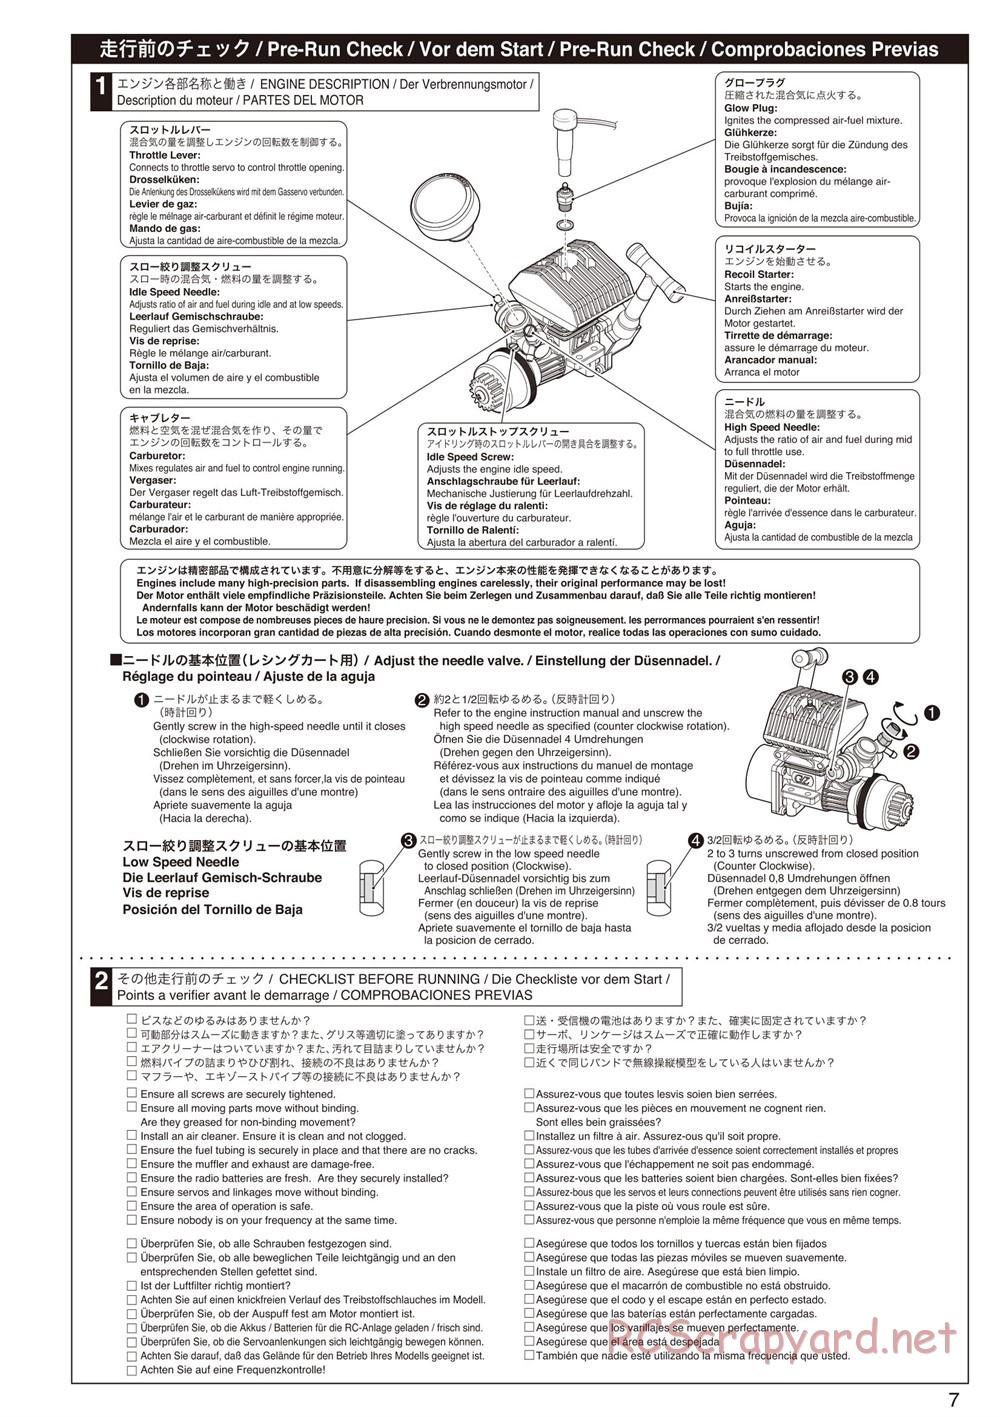 Kyosho - Birel R31-SE Kart - Manual - Page 7